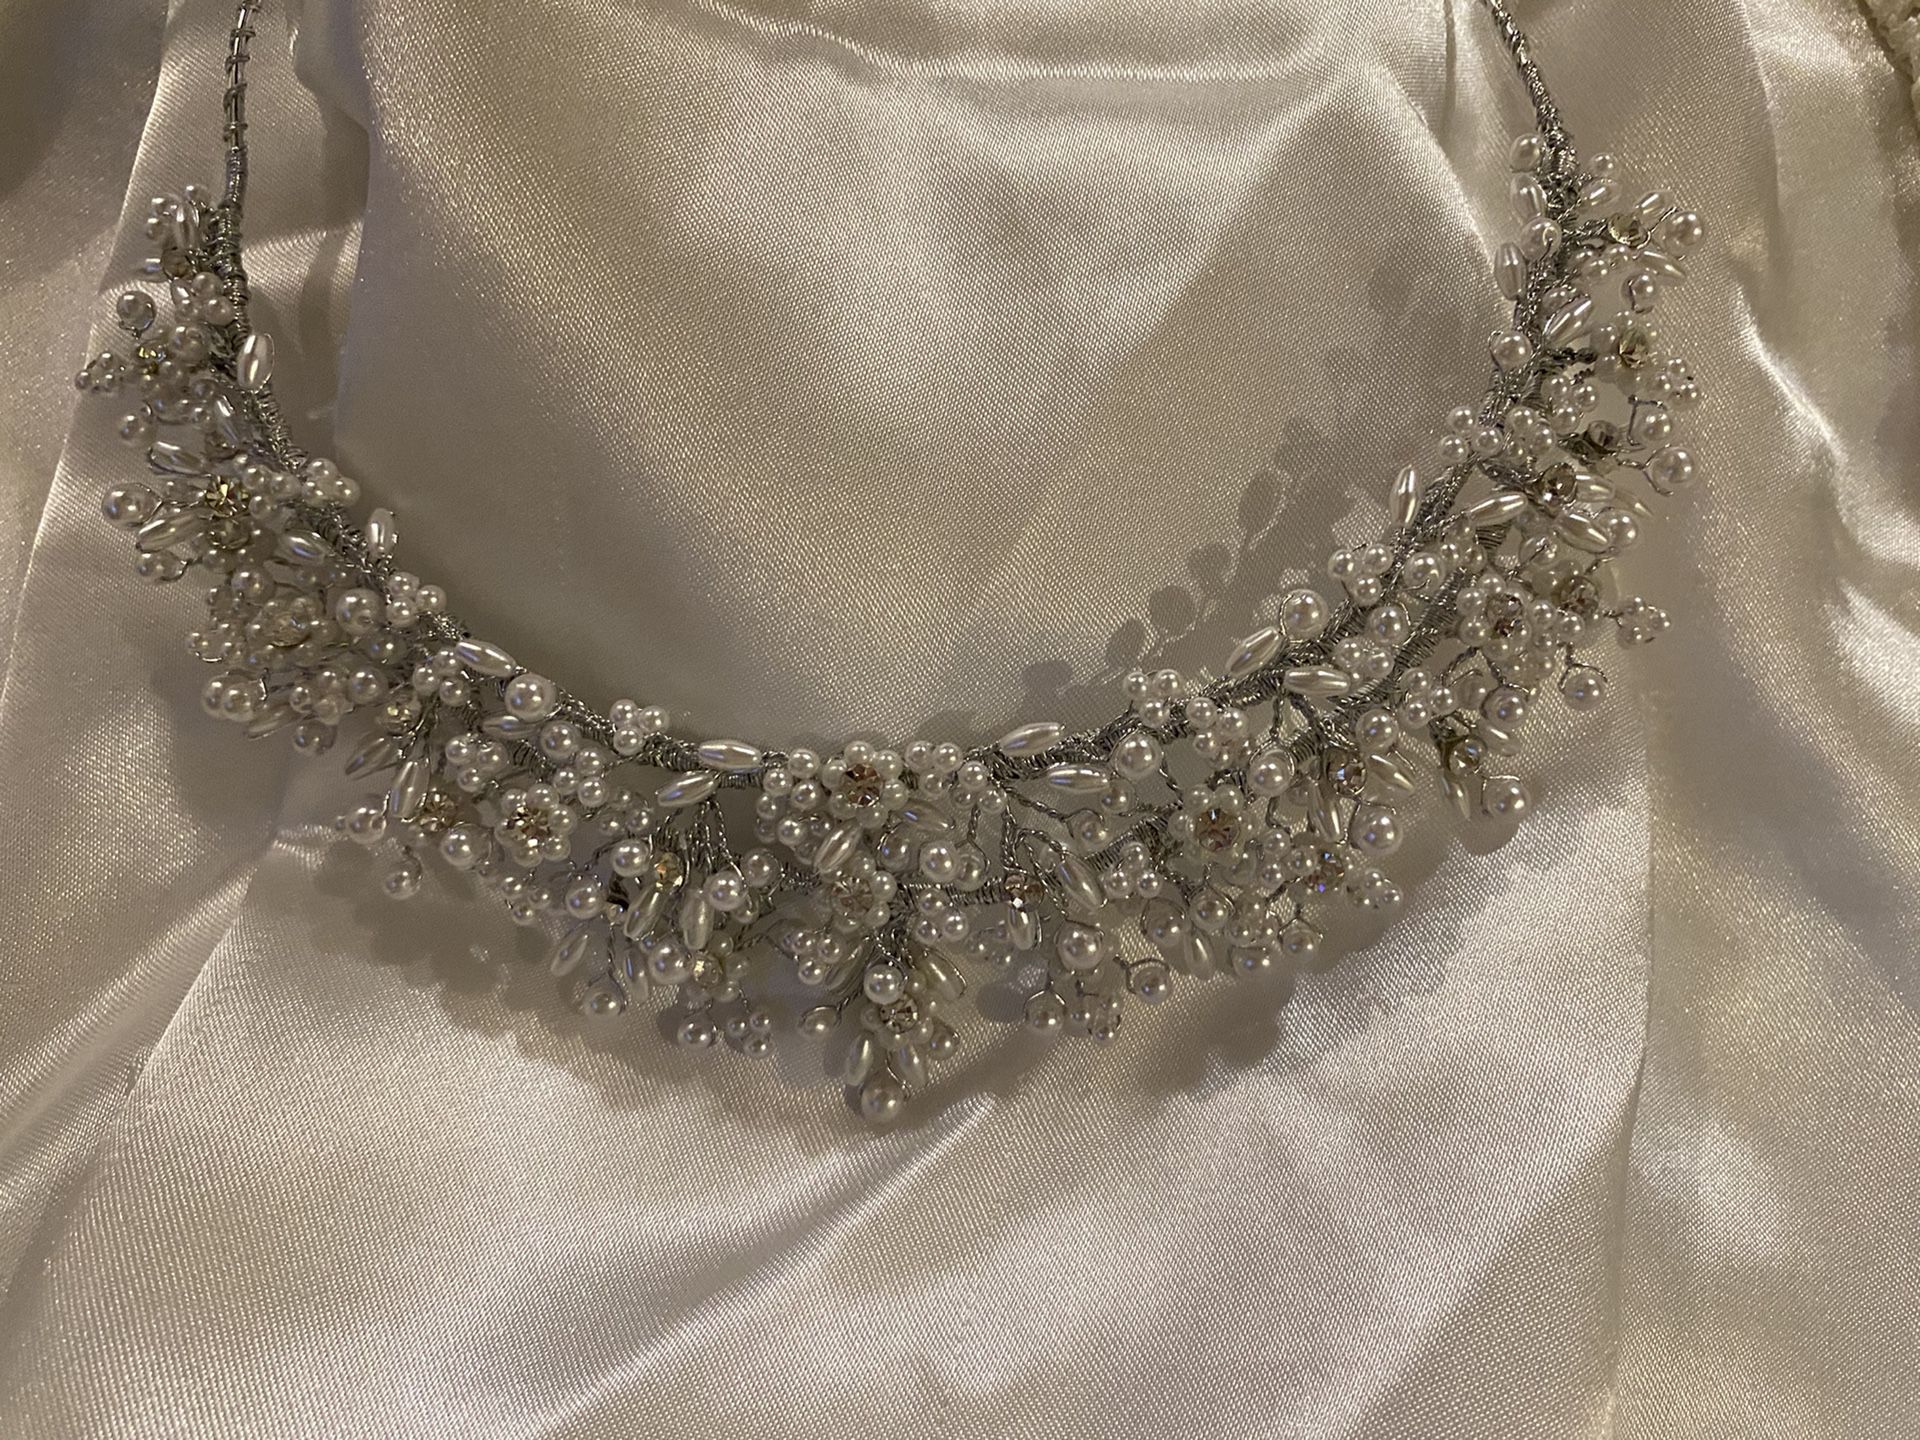 Silver Rhinestone & Pearl Tiara For Wedding, Bday, Prom, Pagent, Flower Girl Etc